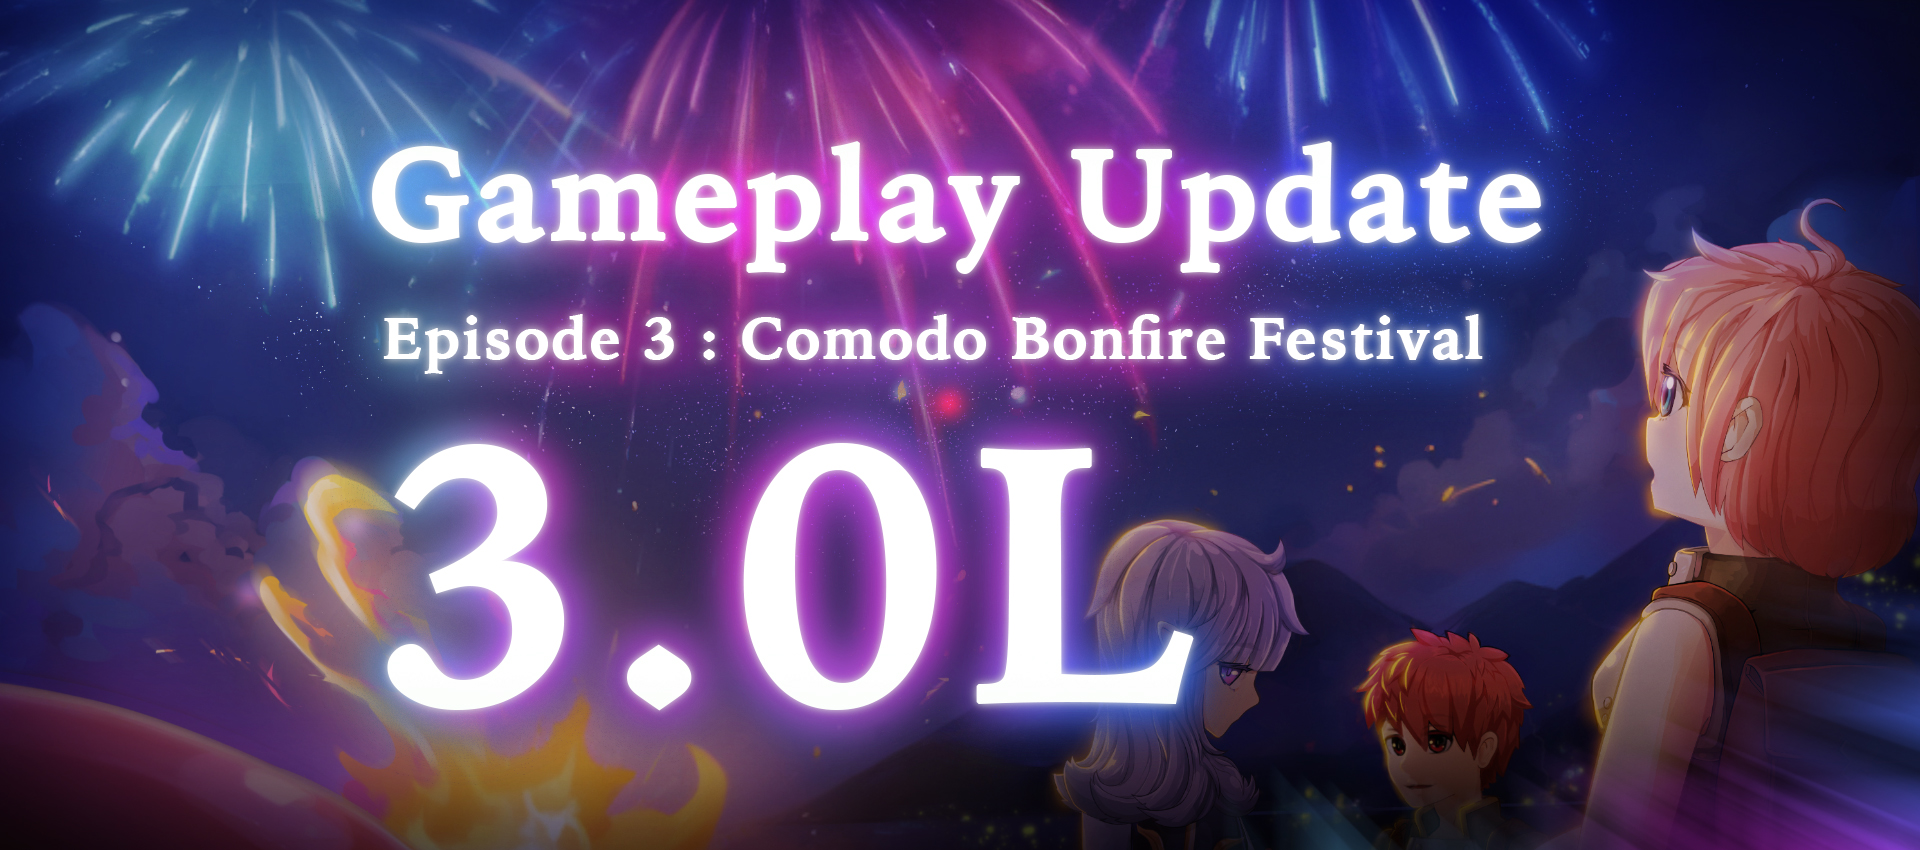 Gameplay Update 3.0L : Comodo Bonfire Festival